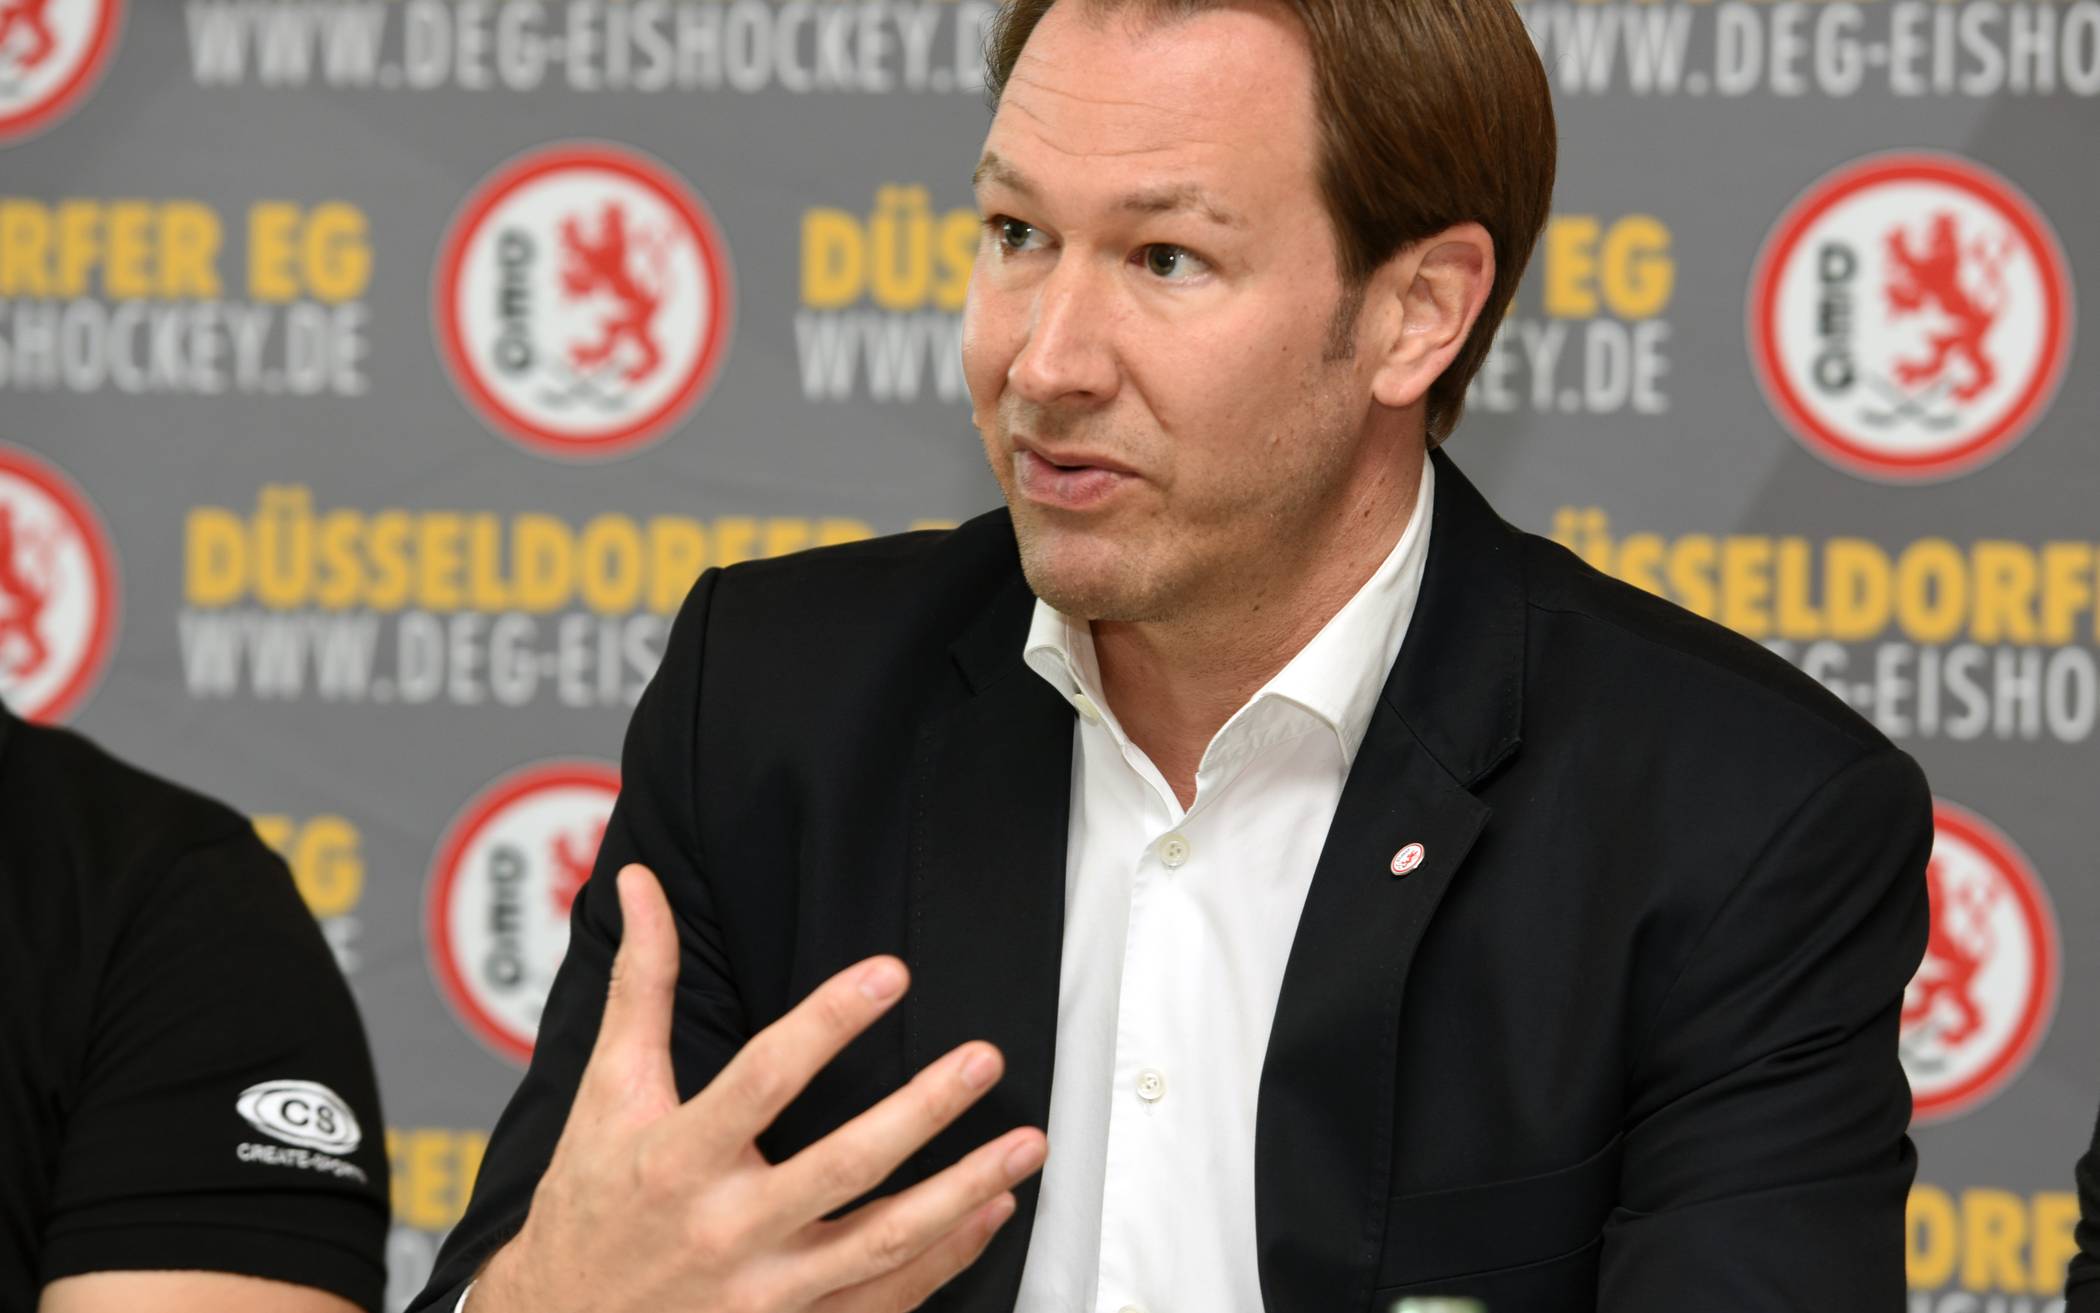  DEG-Geschäftsführer Adam - „Vielfalt erhalten.“   Foto: Horstmüller 